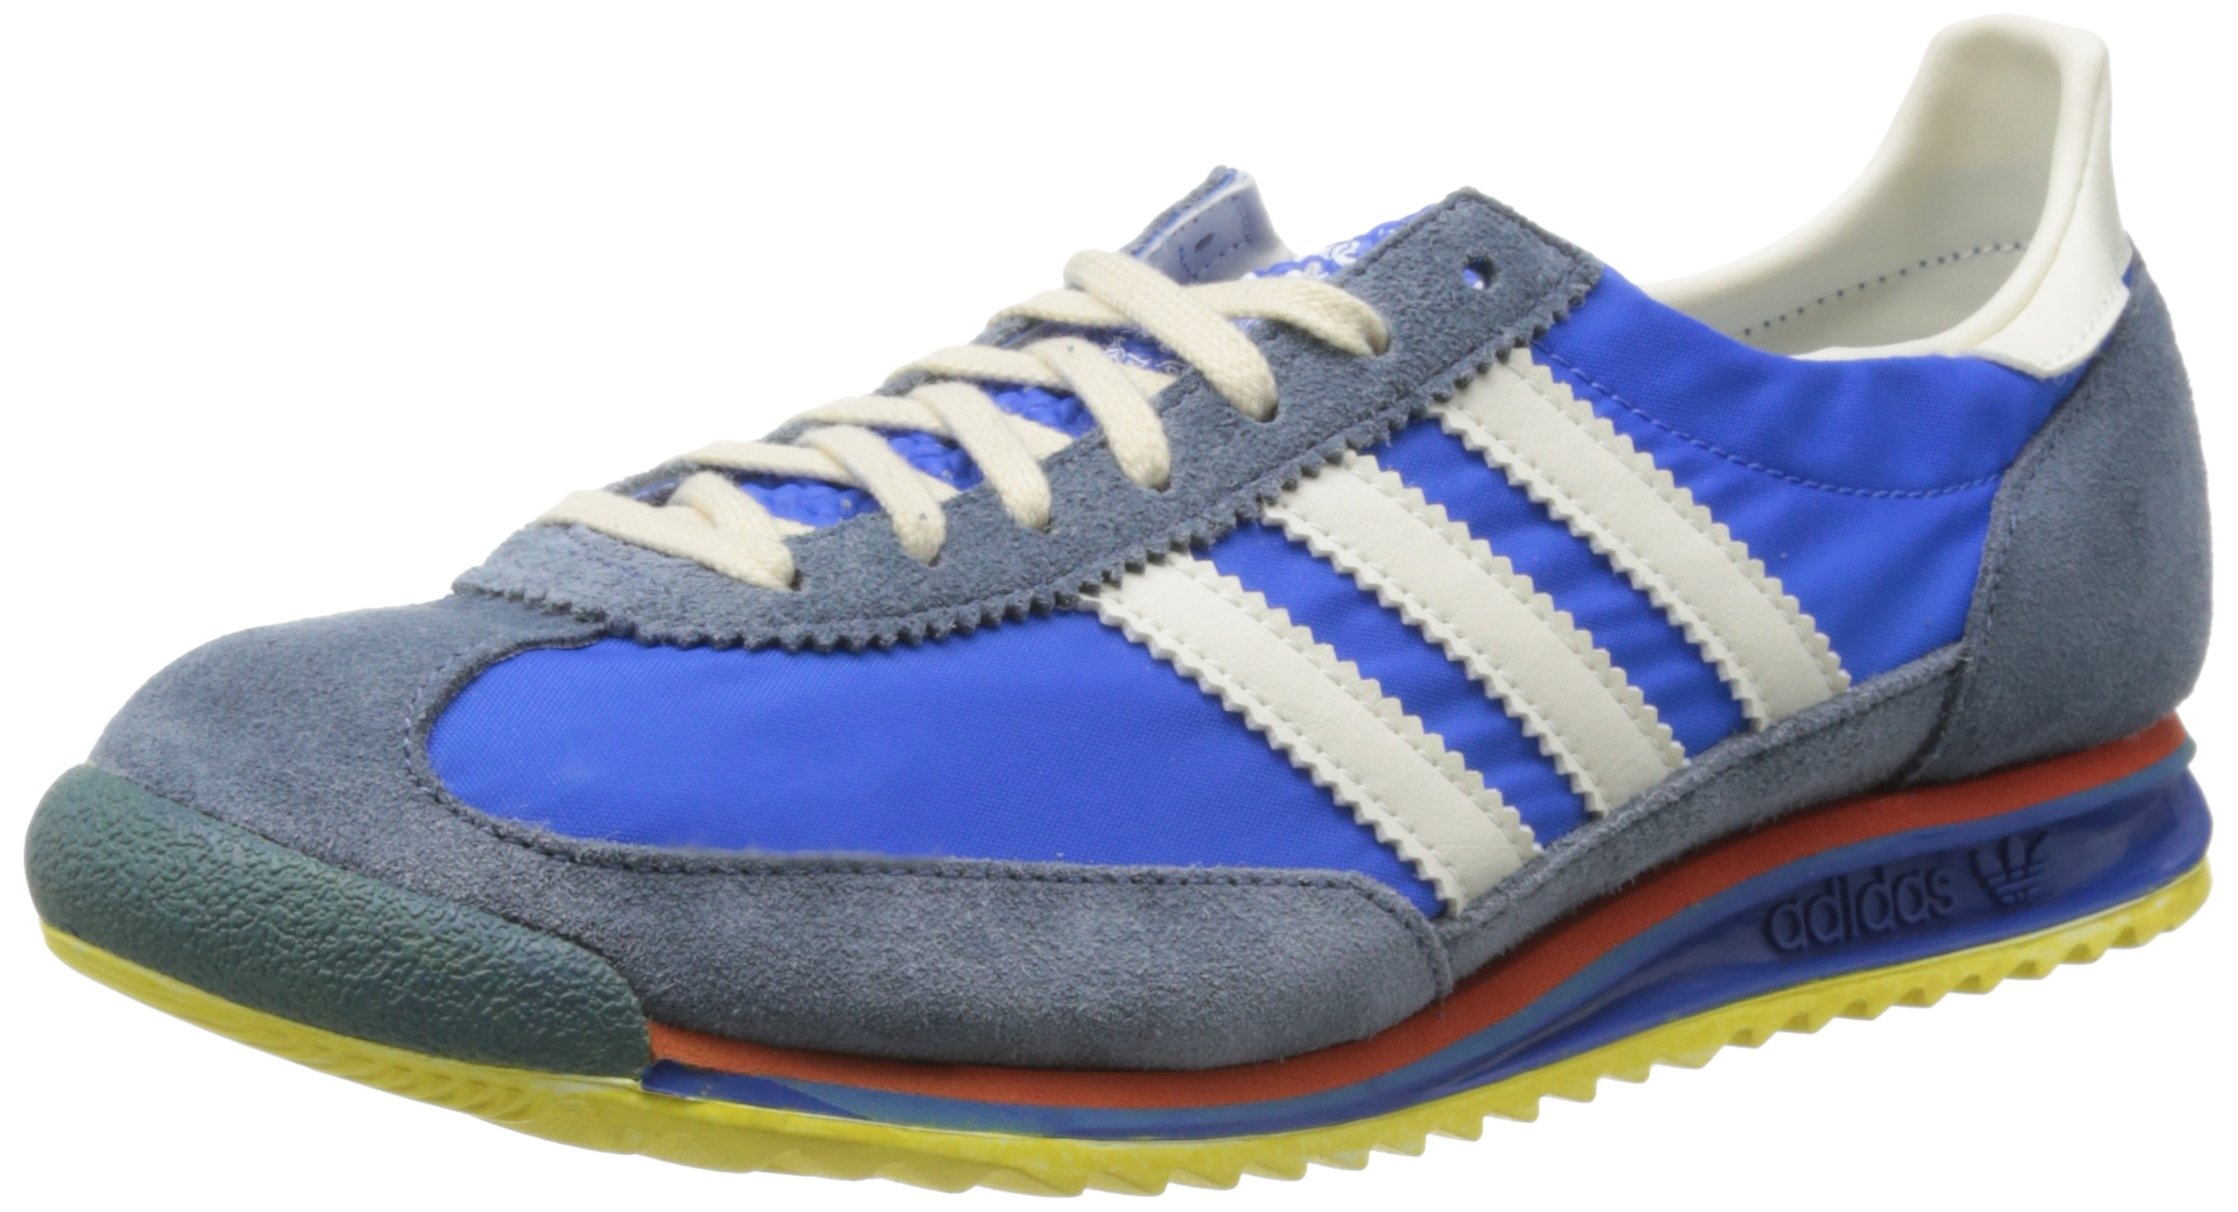 adidas Originals SL 72 909495, Herren Sportive Sneakers, Blau (AIR FORCE BLUE / LEGACY / SLATE), EU 43 1/3 (UK 9) - 43 1/3 EU